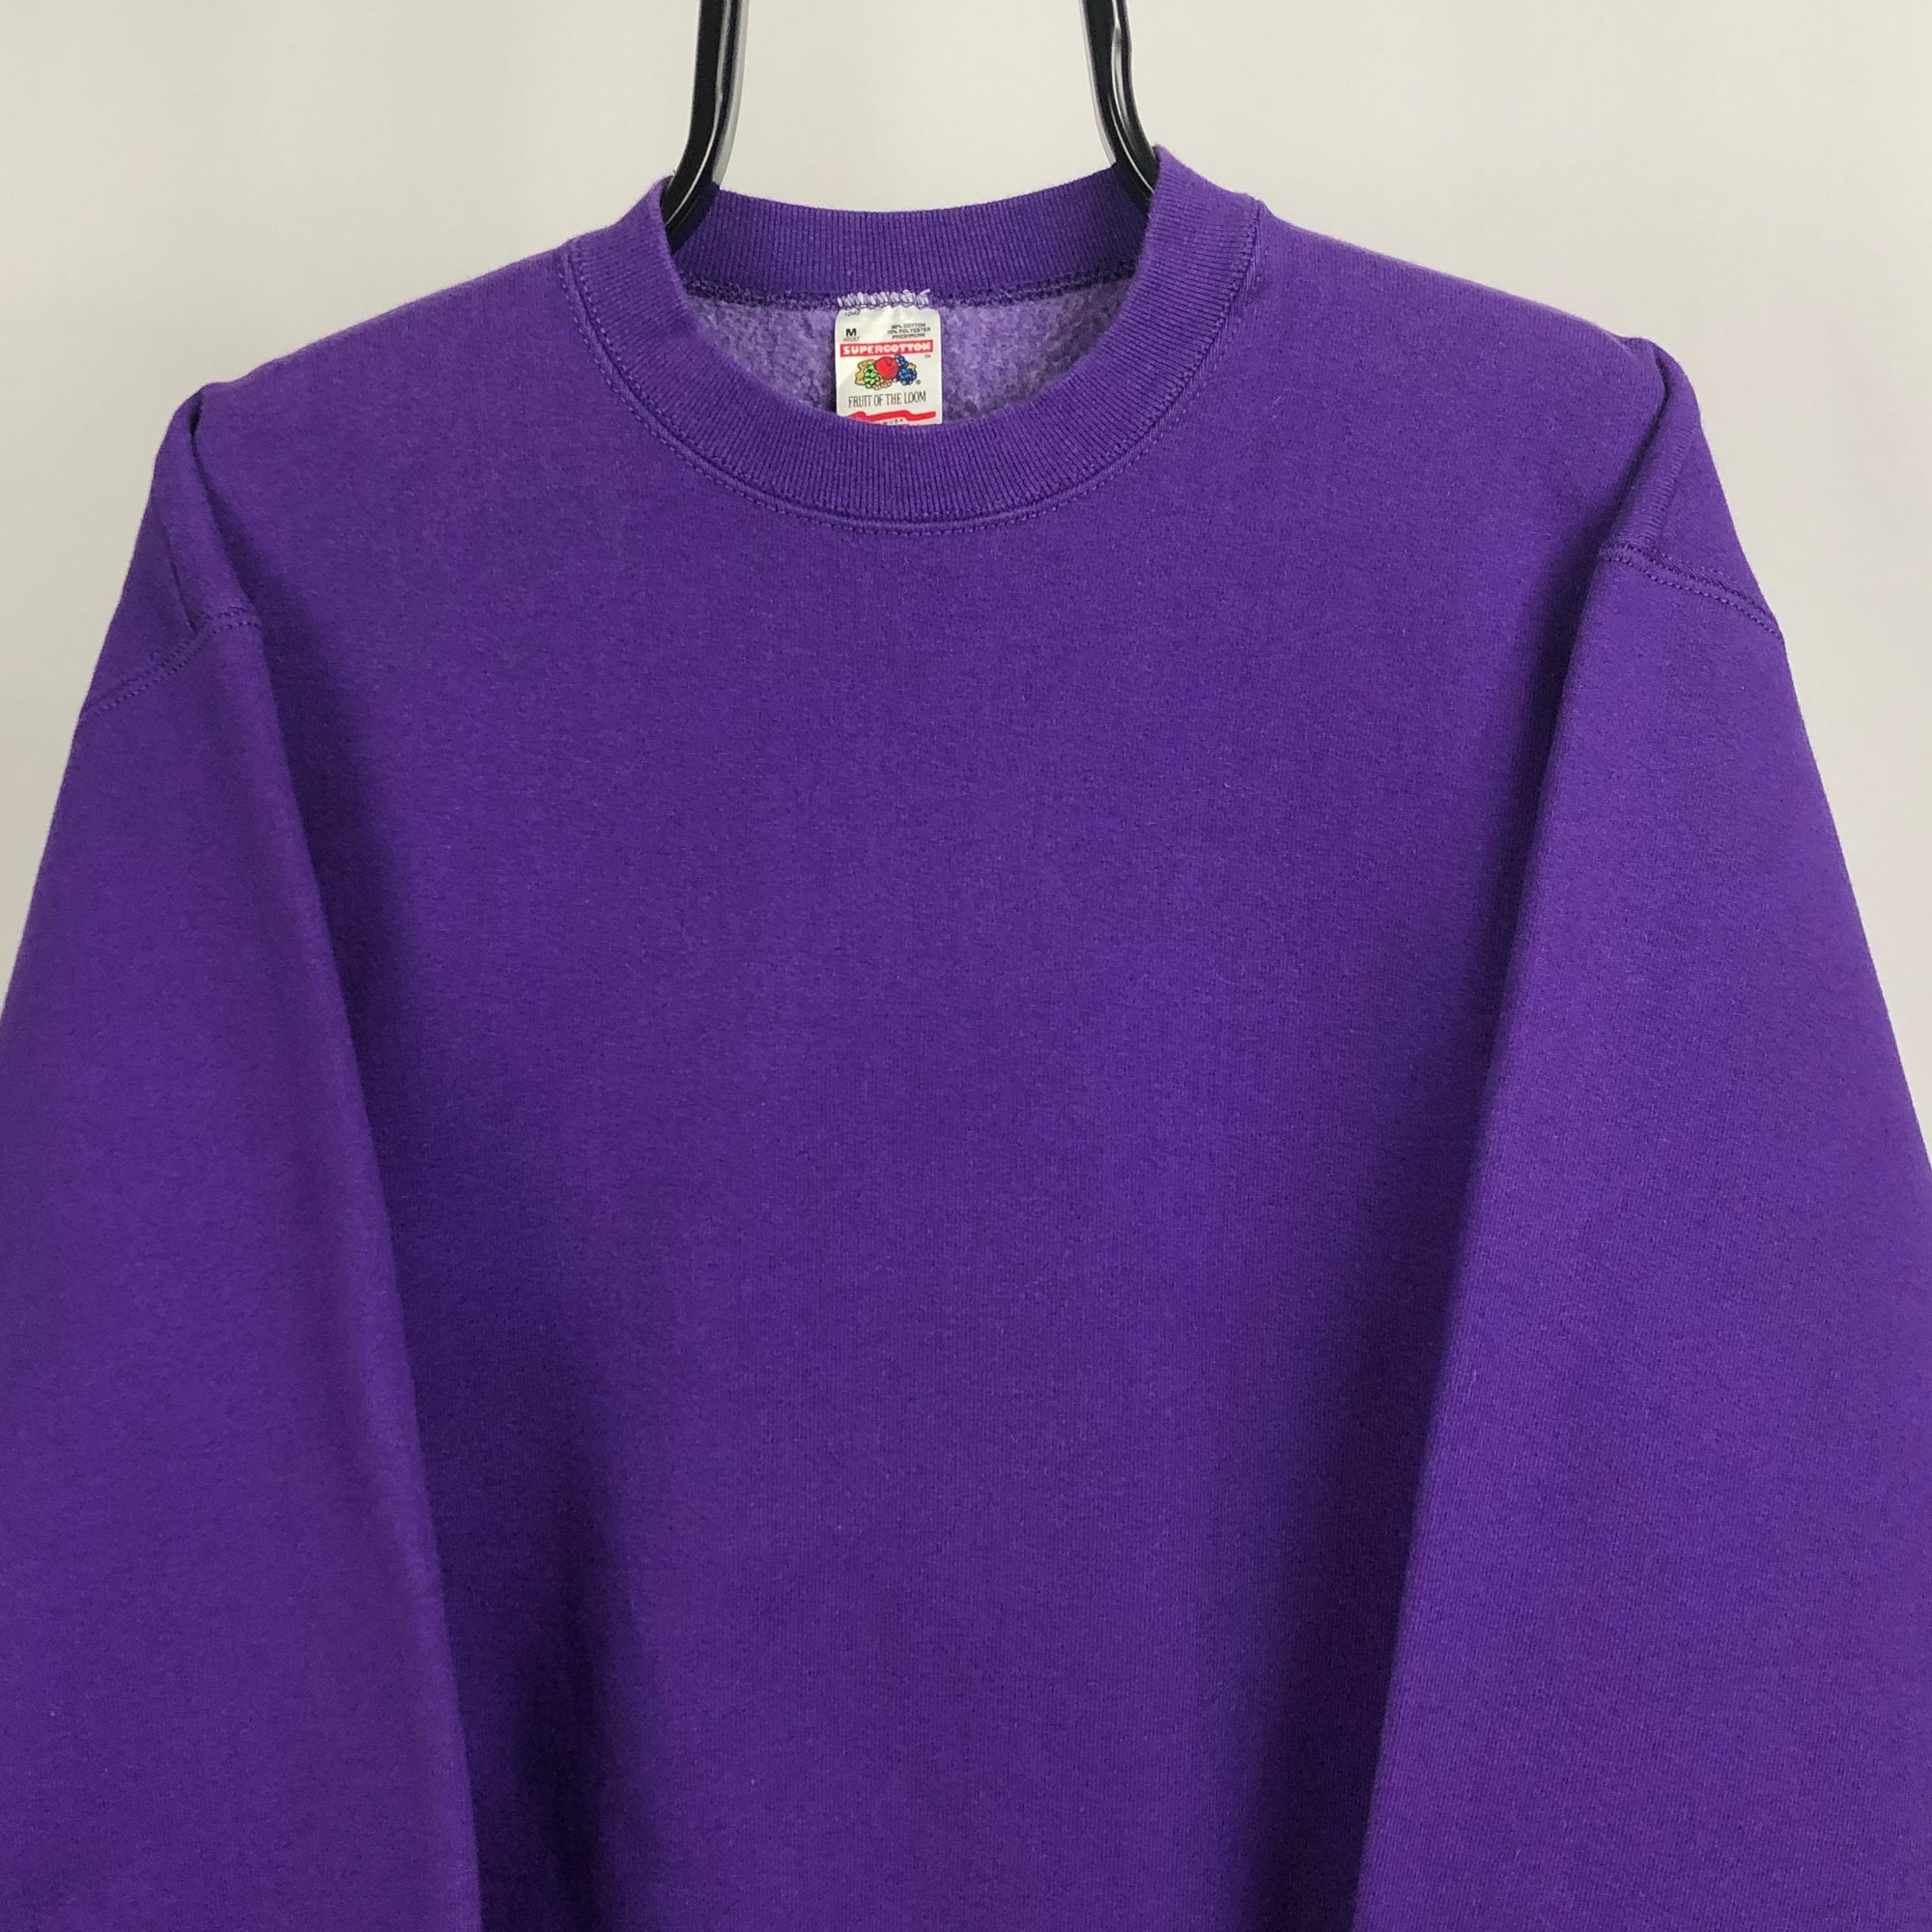 Vintage Heavyweight Sweatshirt in Purple - Men's Medium/Women's Large